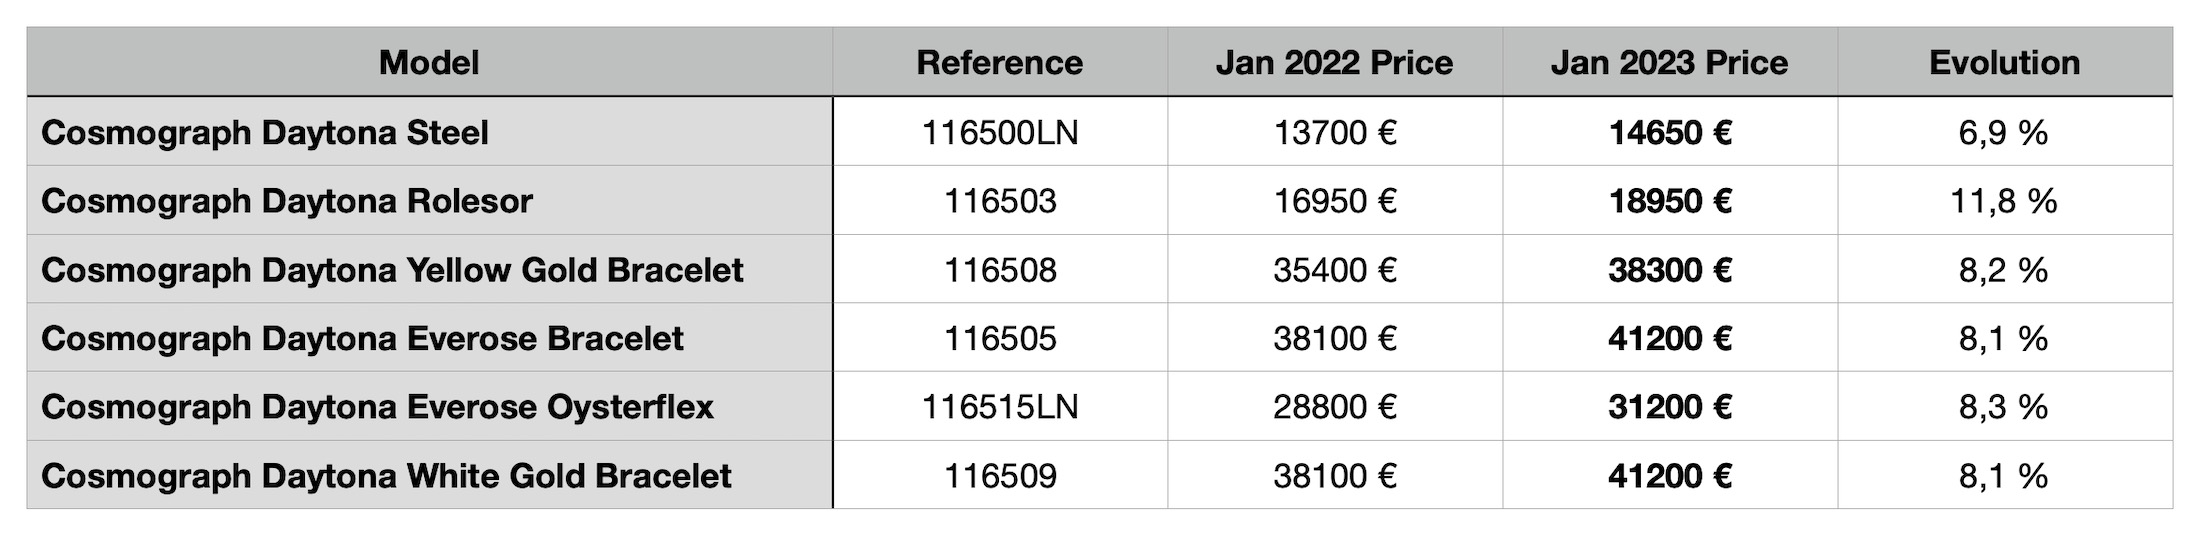 2023 Rolex Price List - Increase Compared 2022 - Rolex Daytona